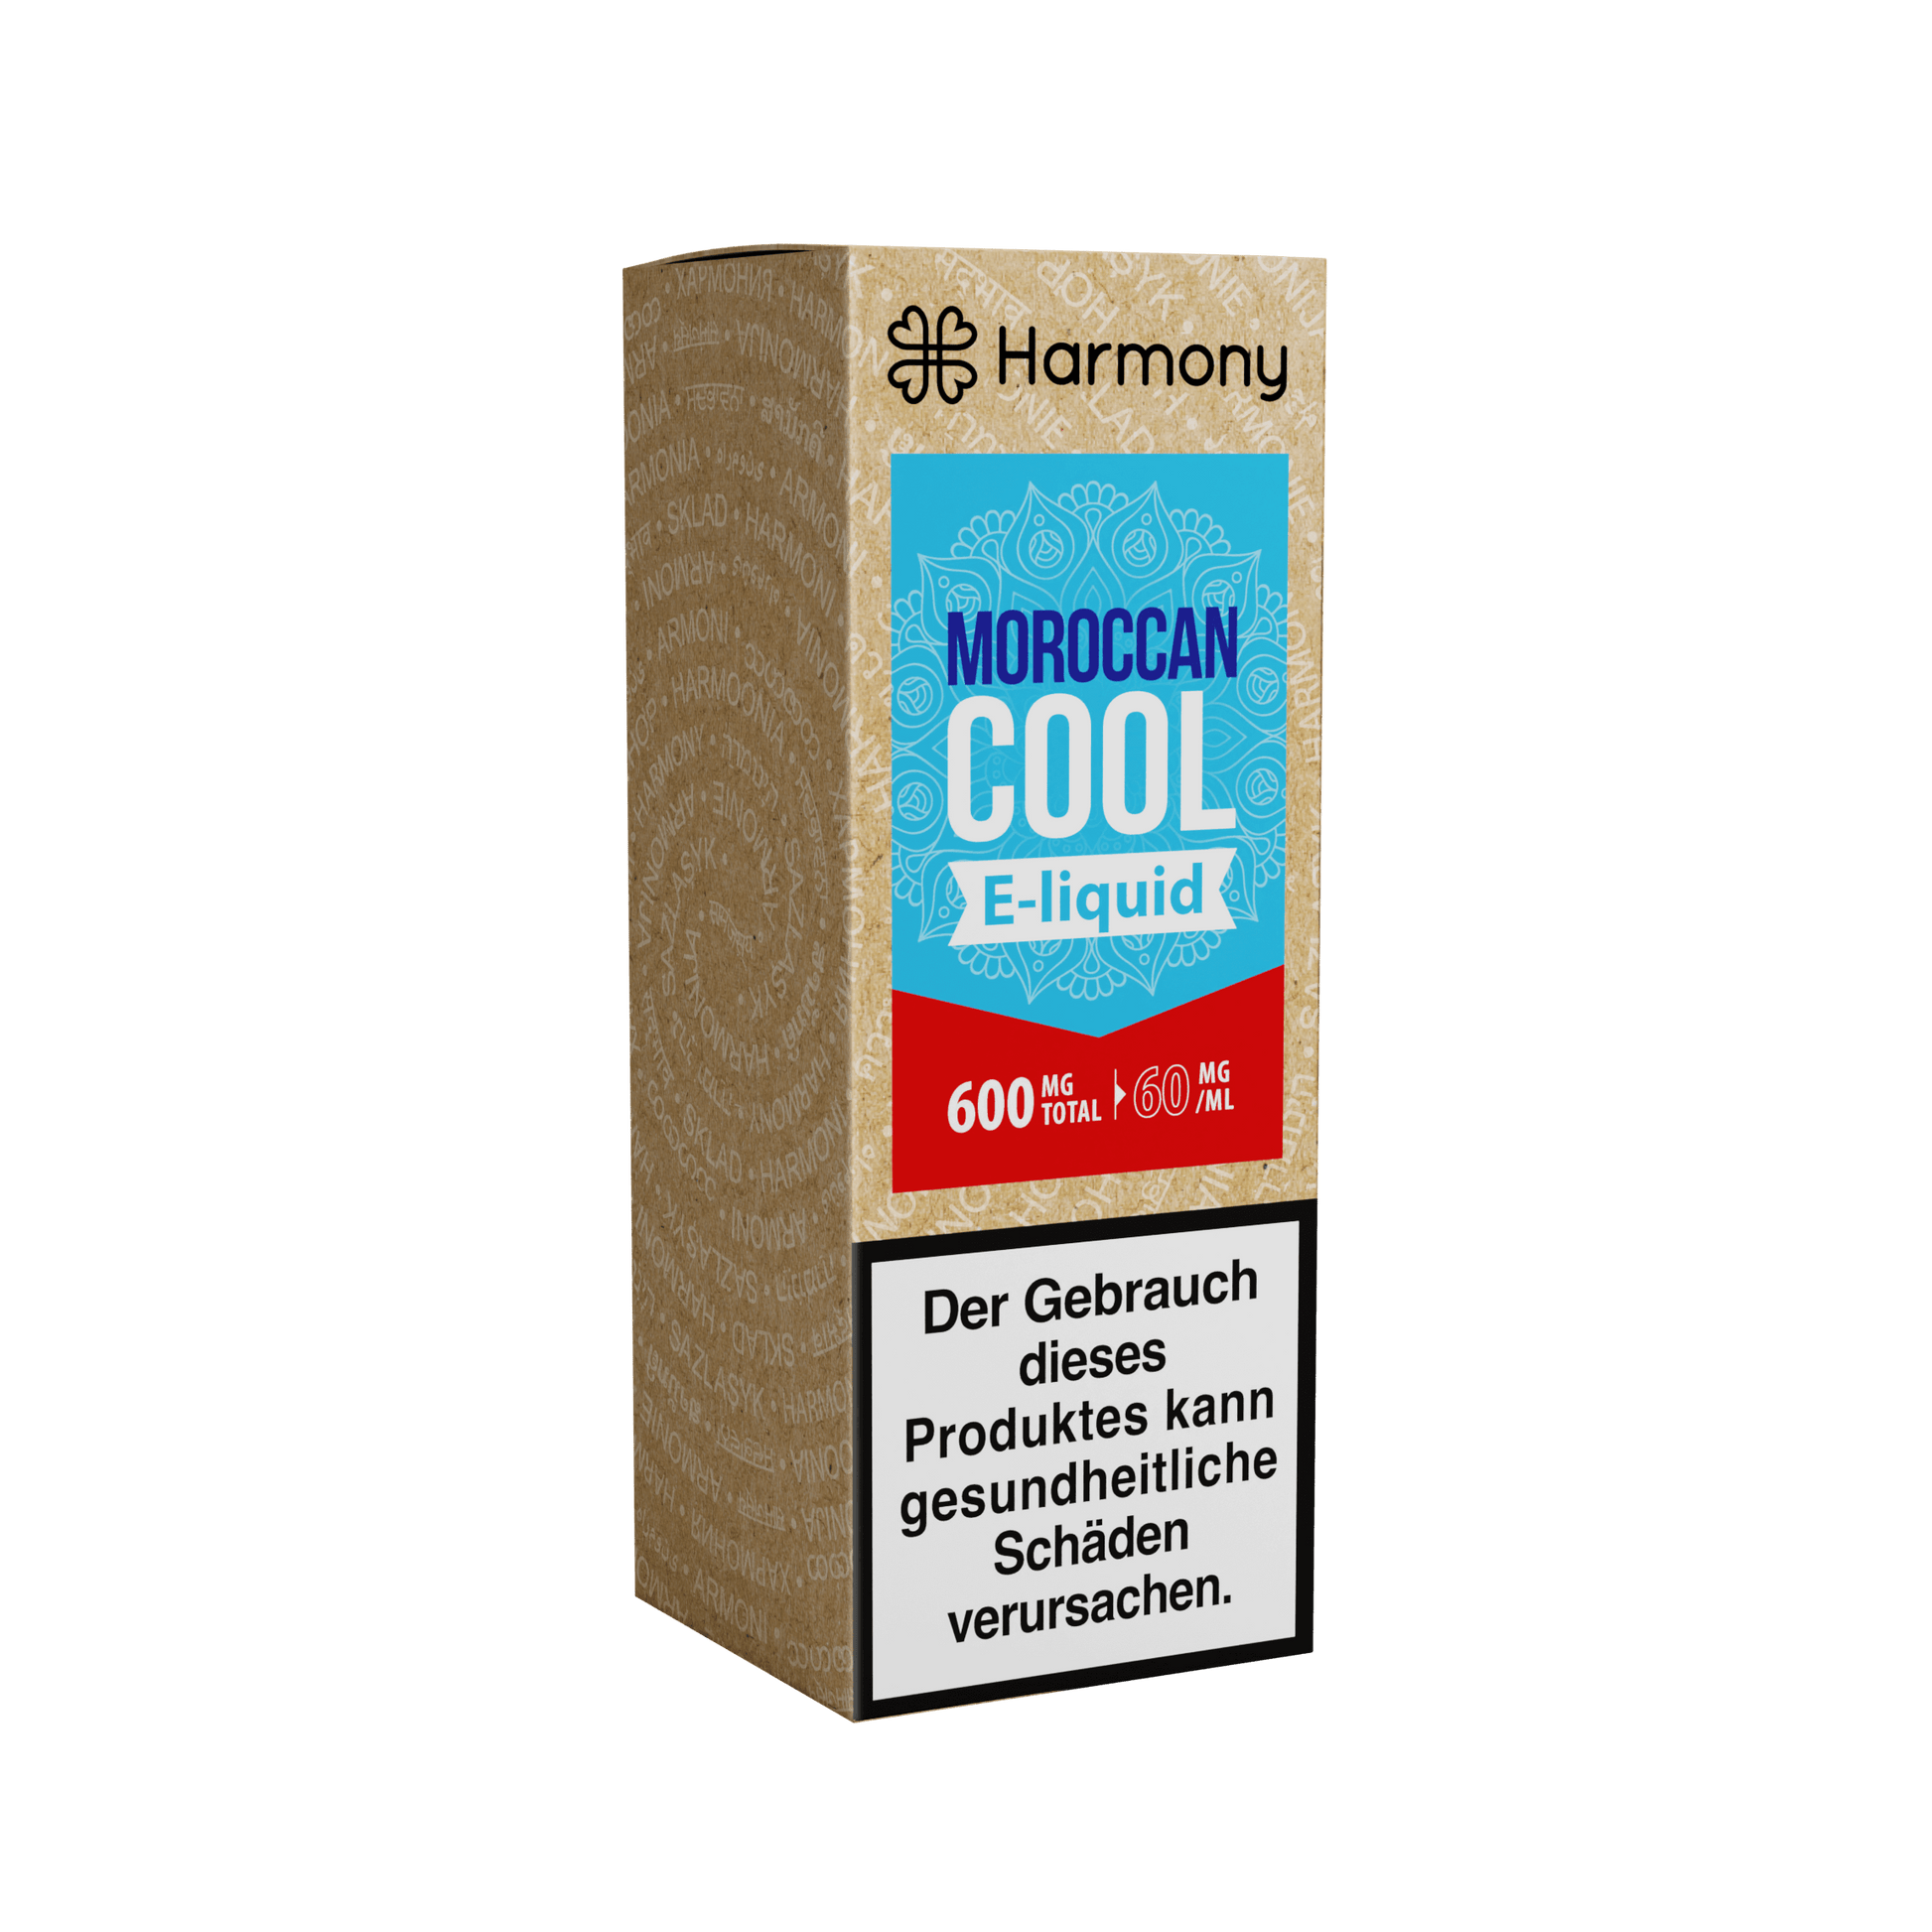 Harmony Moroccan Cool CBD Liquid 600mg